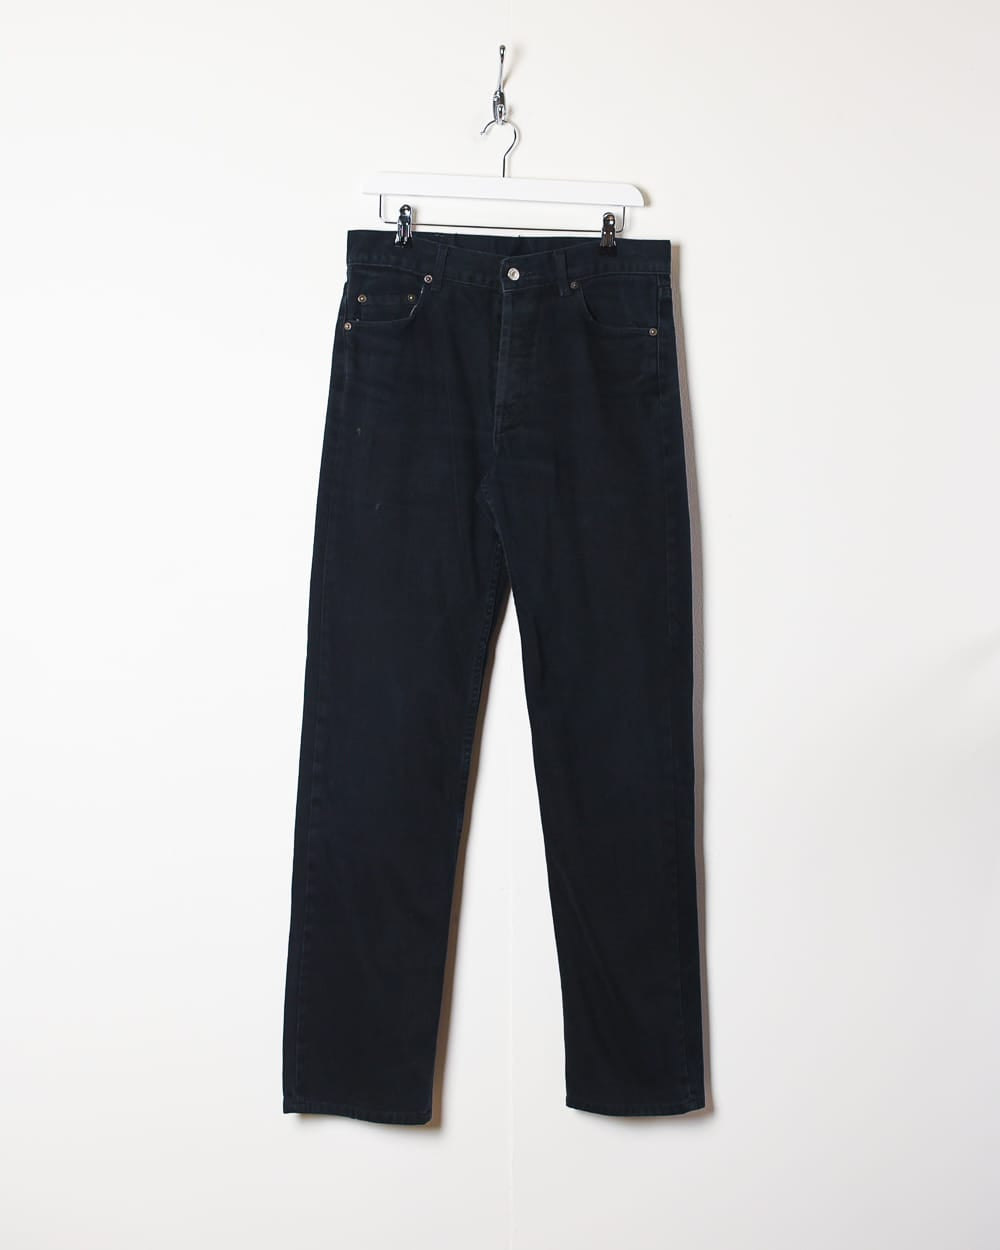 Black Levi's 501 Jeans - W30 L32